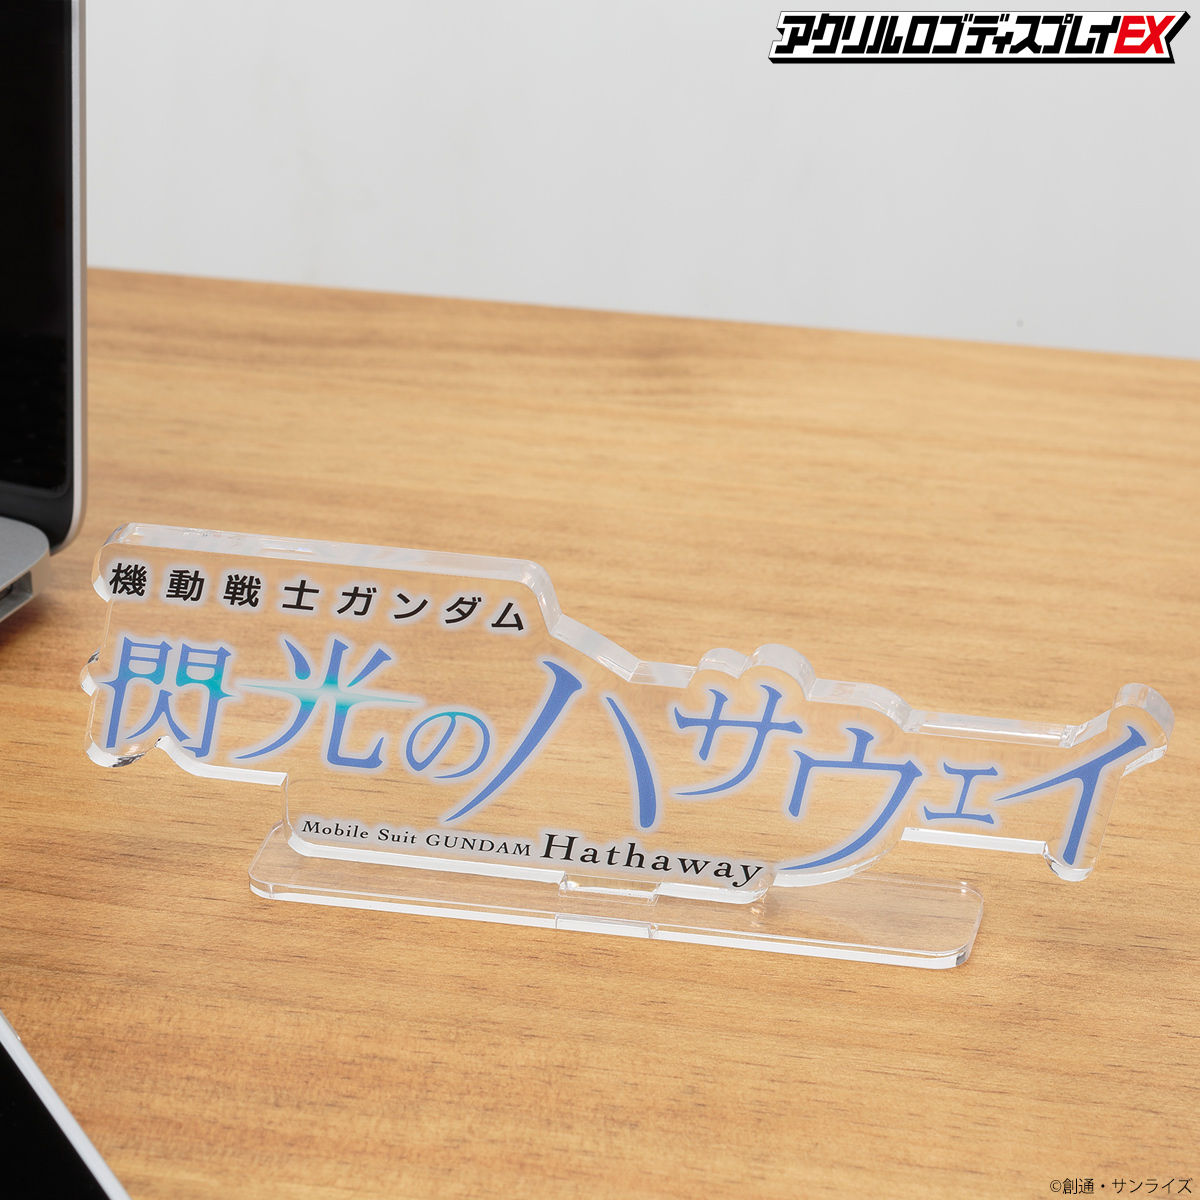 Mega Size of Acrylic Logo Display EX Mobile Suit Gundam Hathaway in Transparent Background